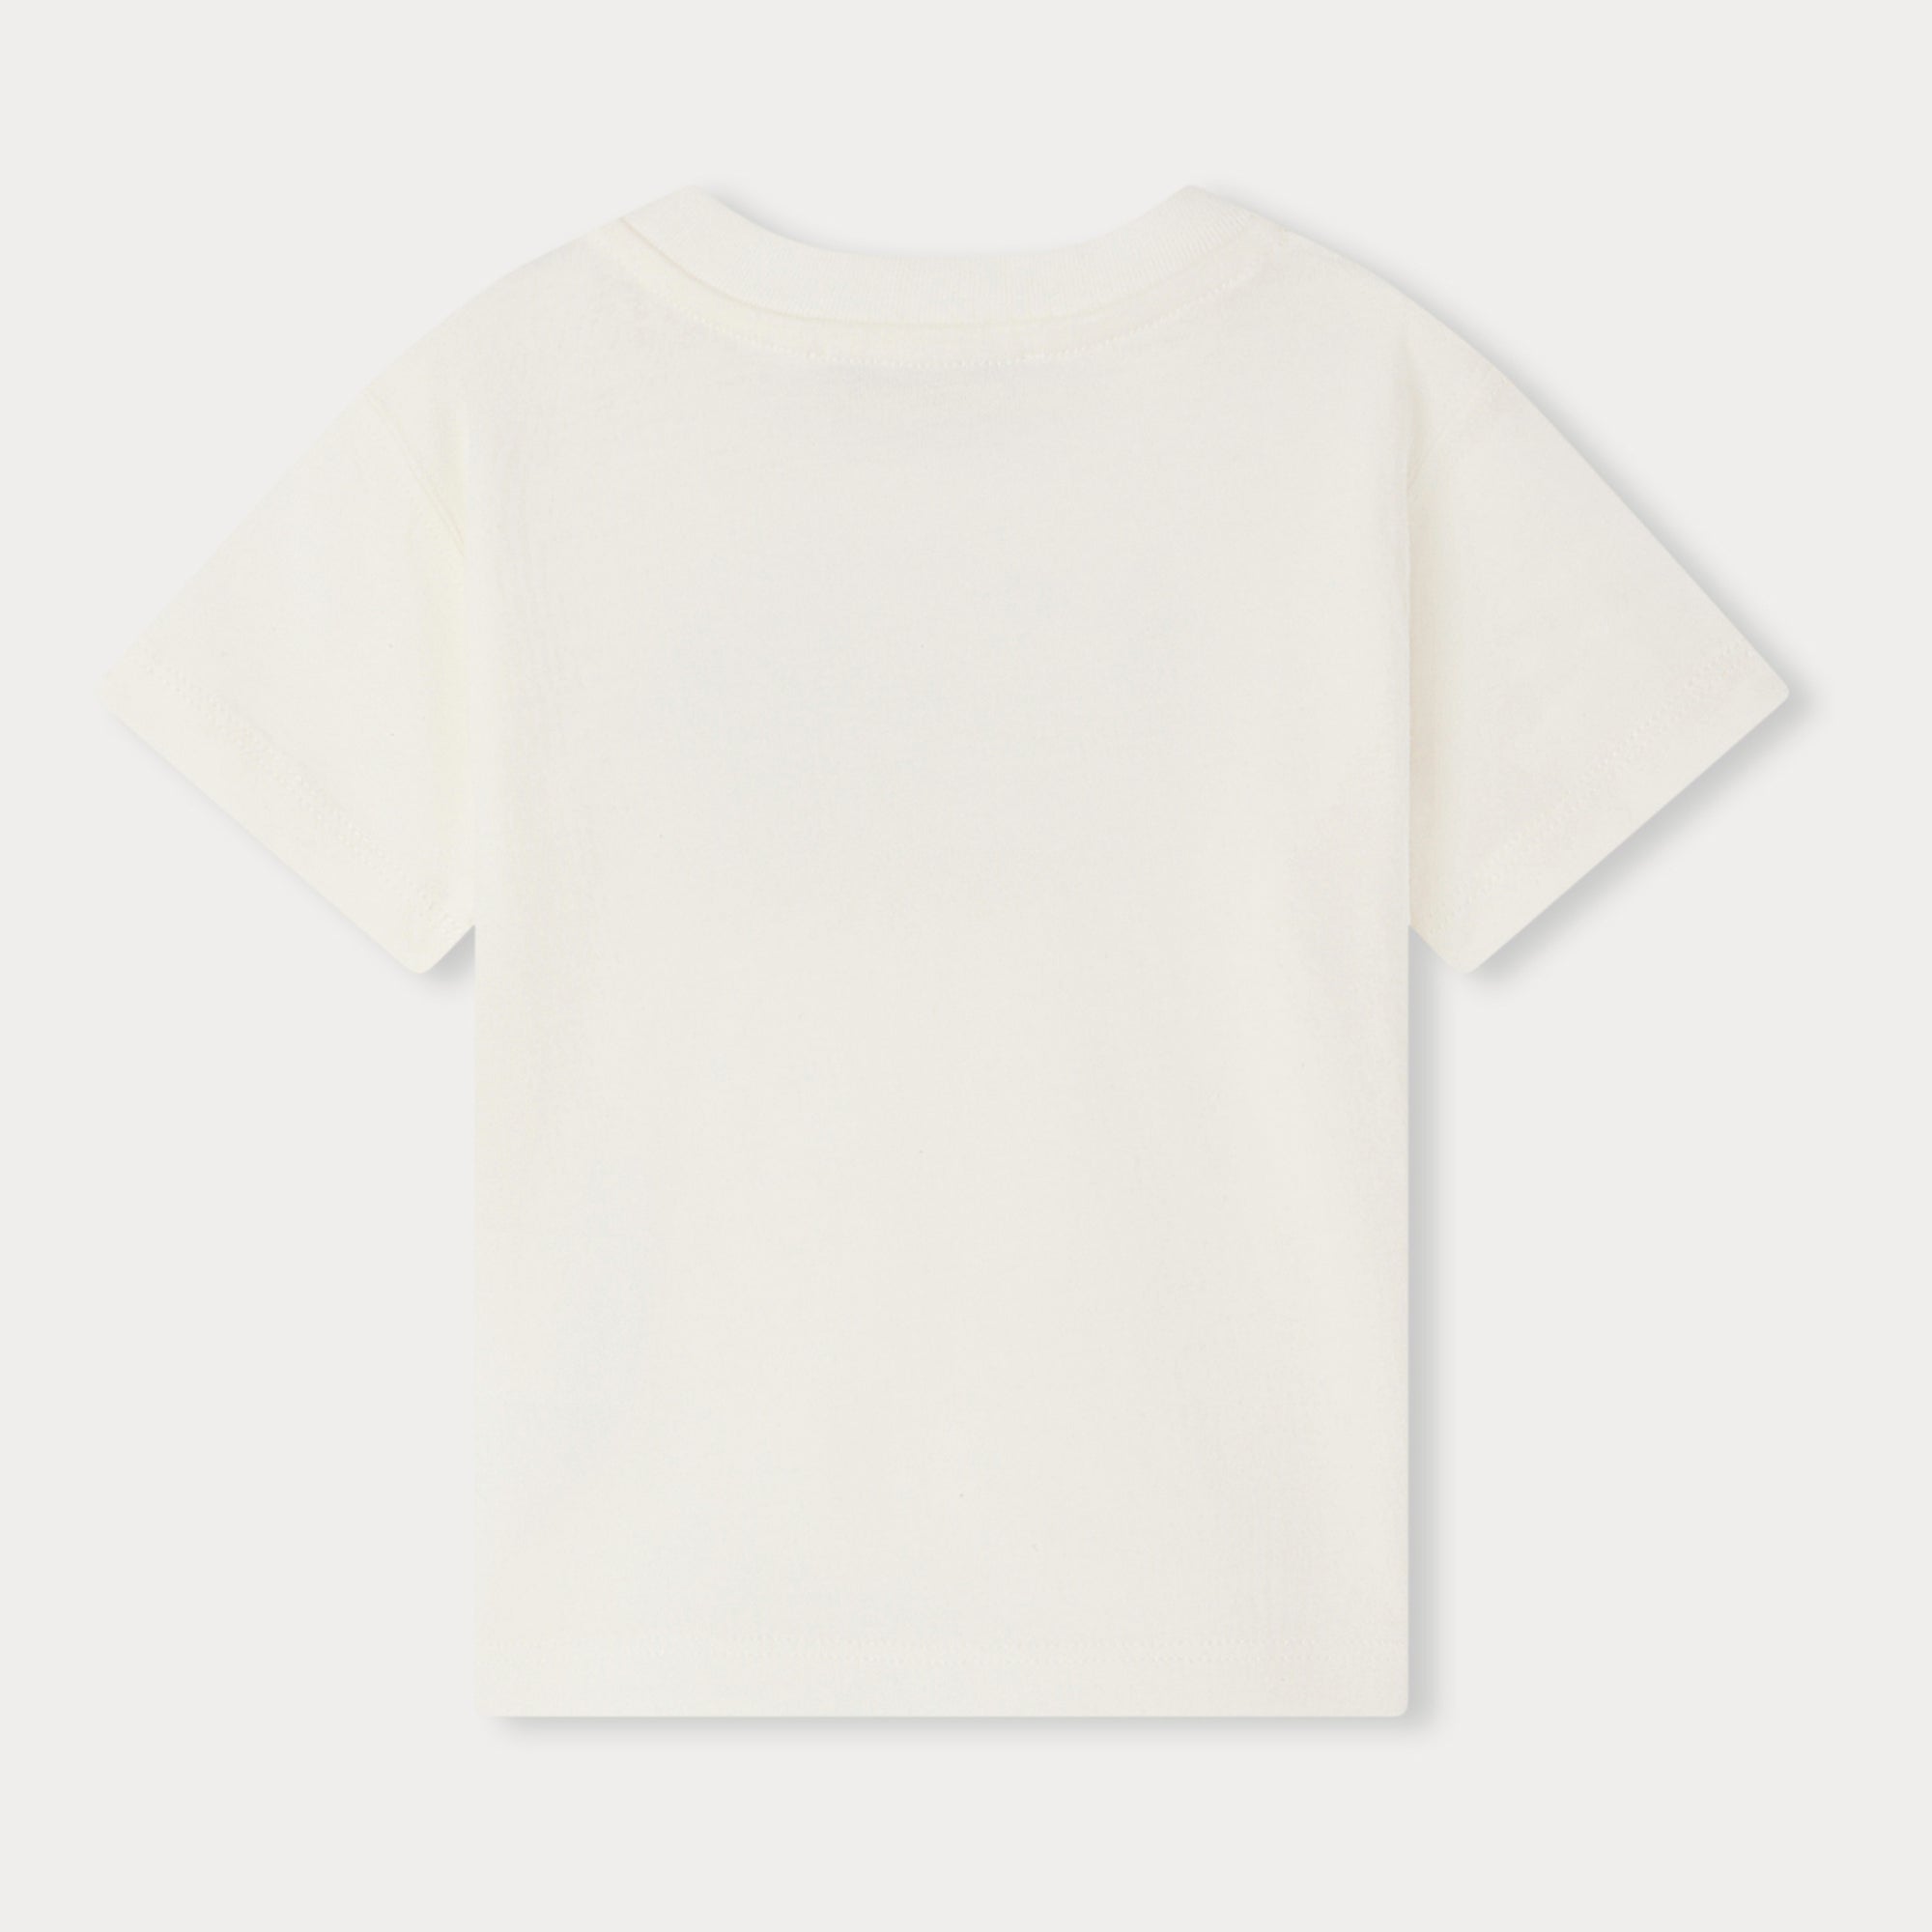 Baby Boys White Cotton T-Shirt